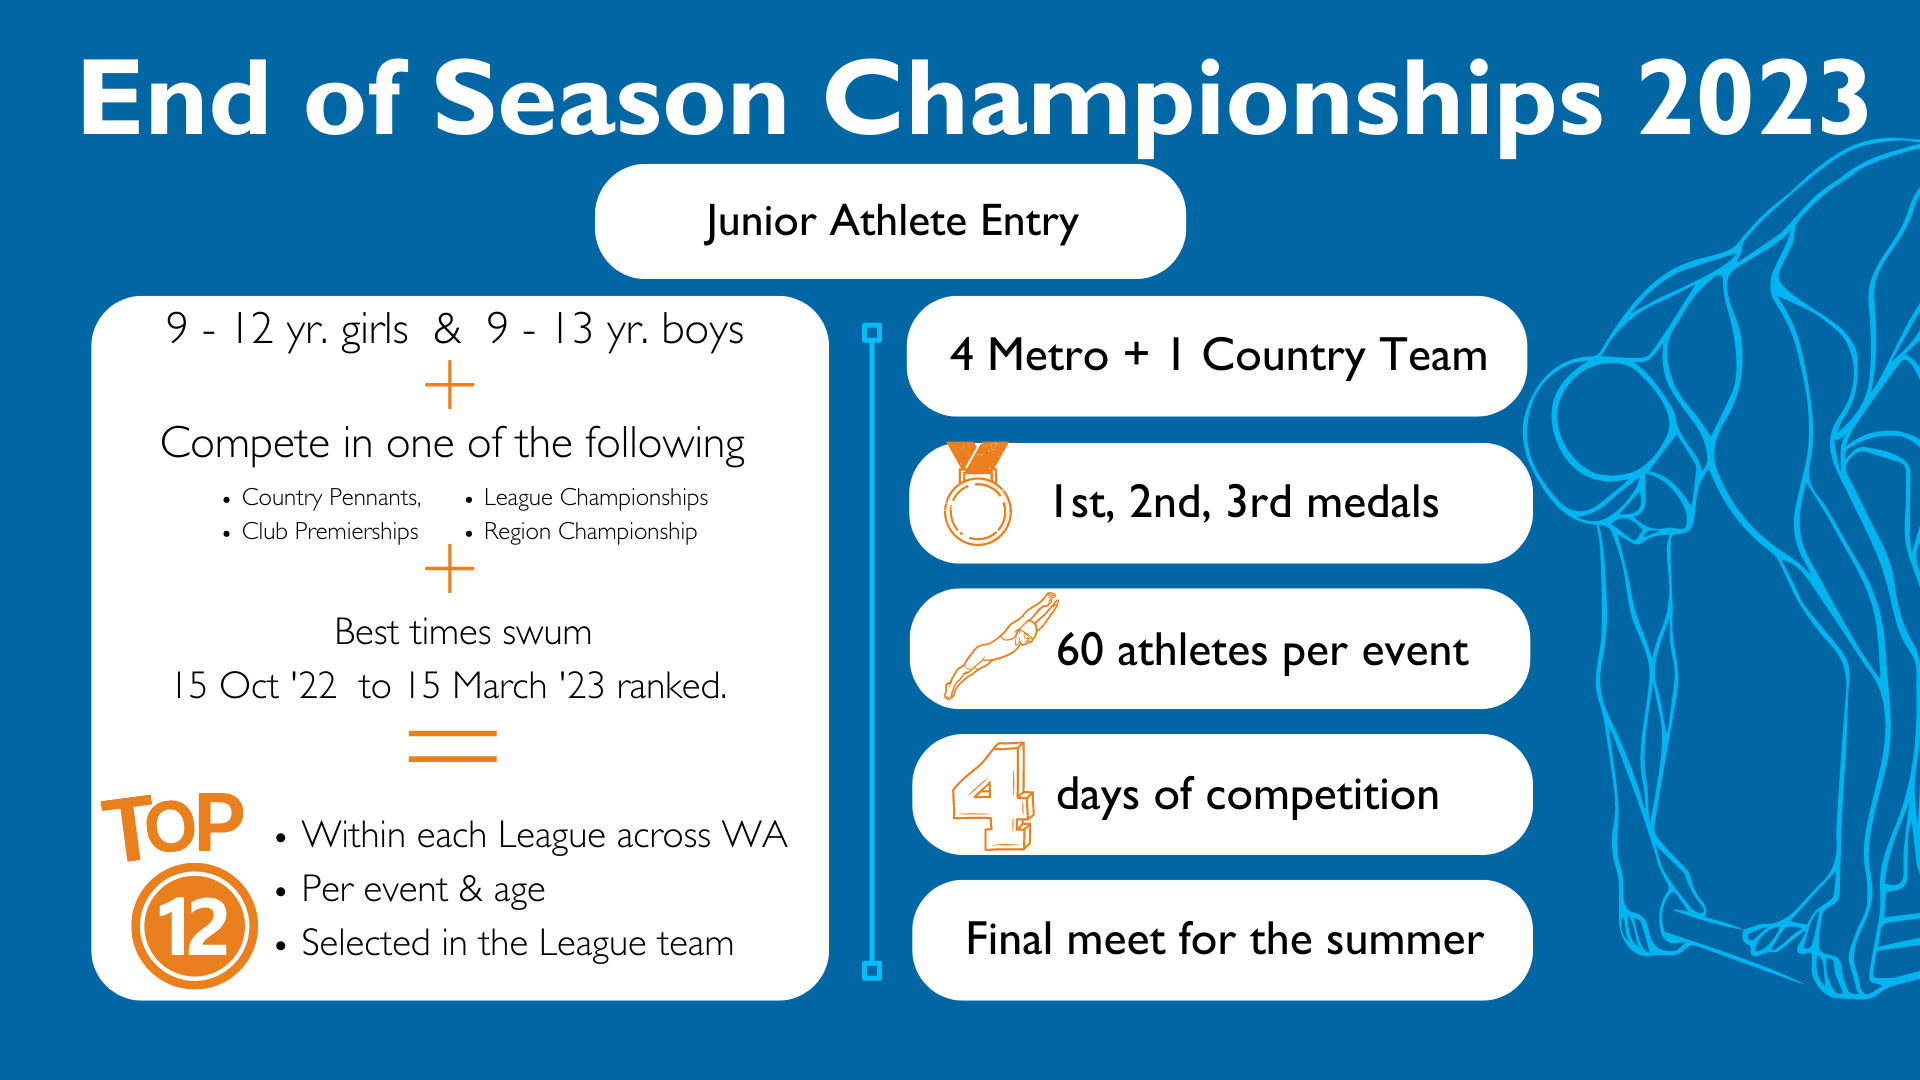 End of Season Championships juniors